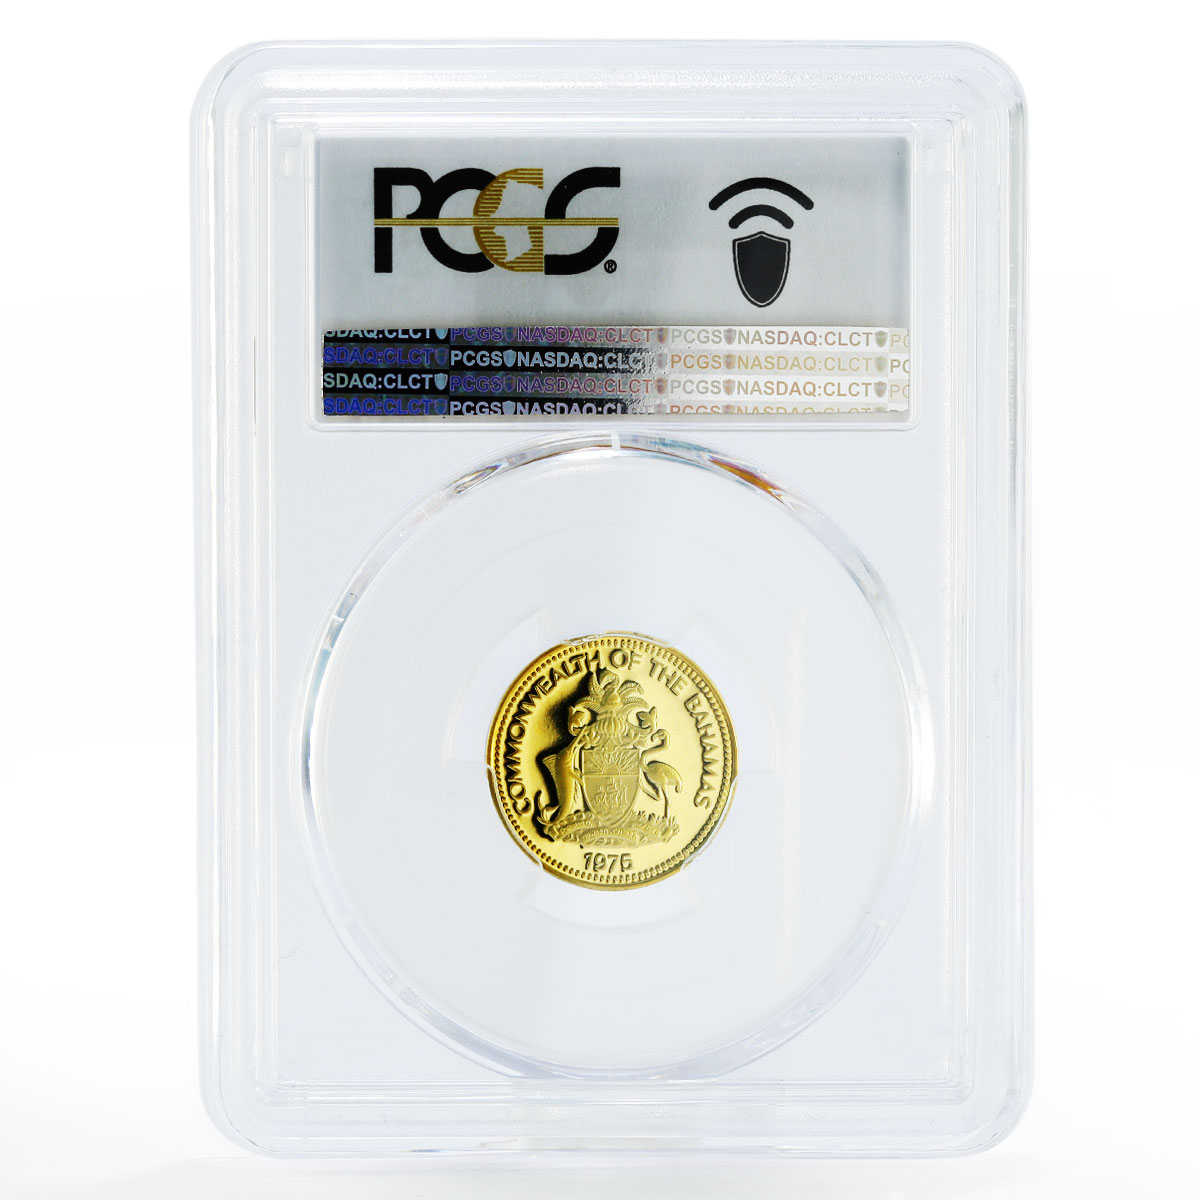 Bahamas 1 cent Sea Star PR70 PCGS proof brass coin 1975